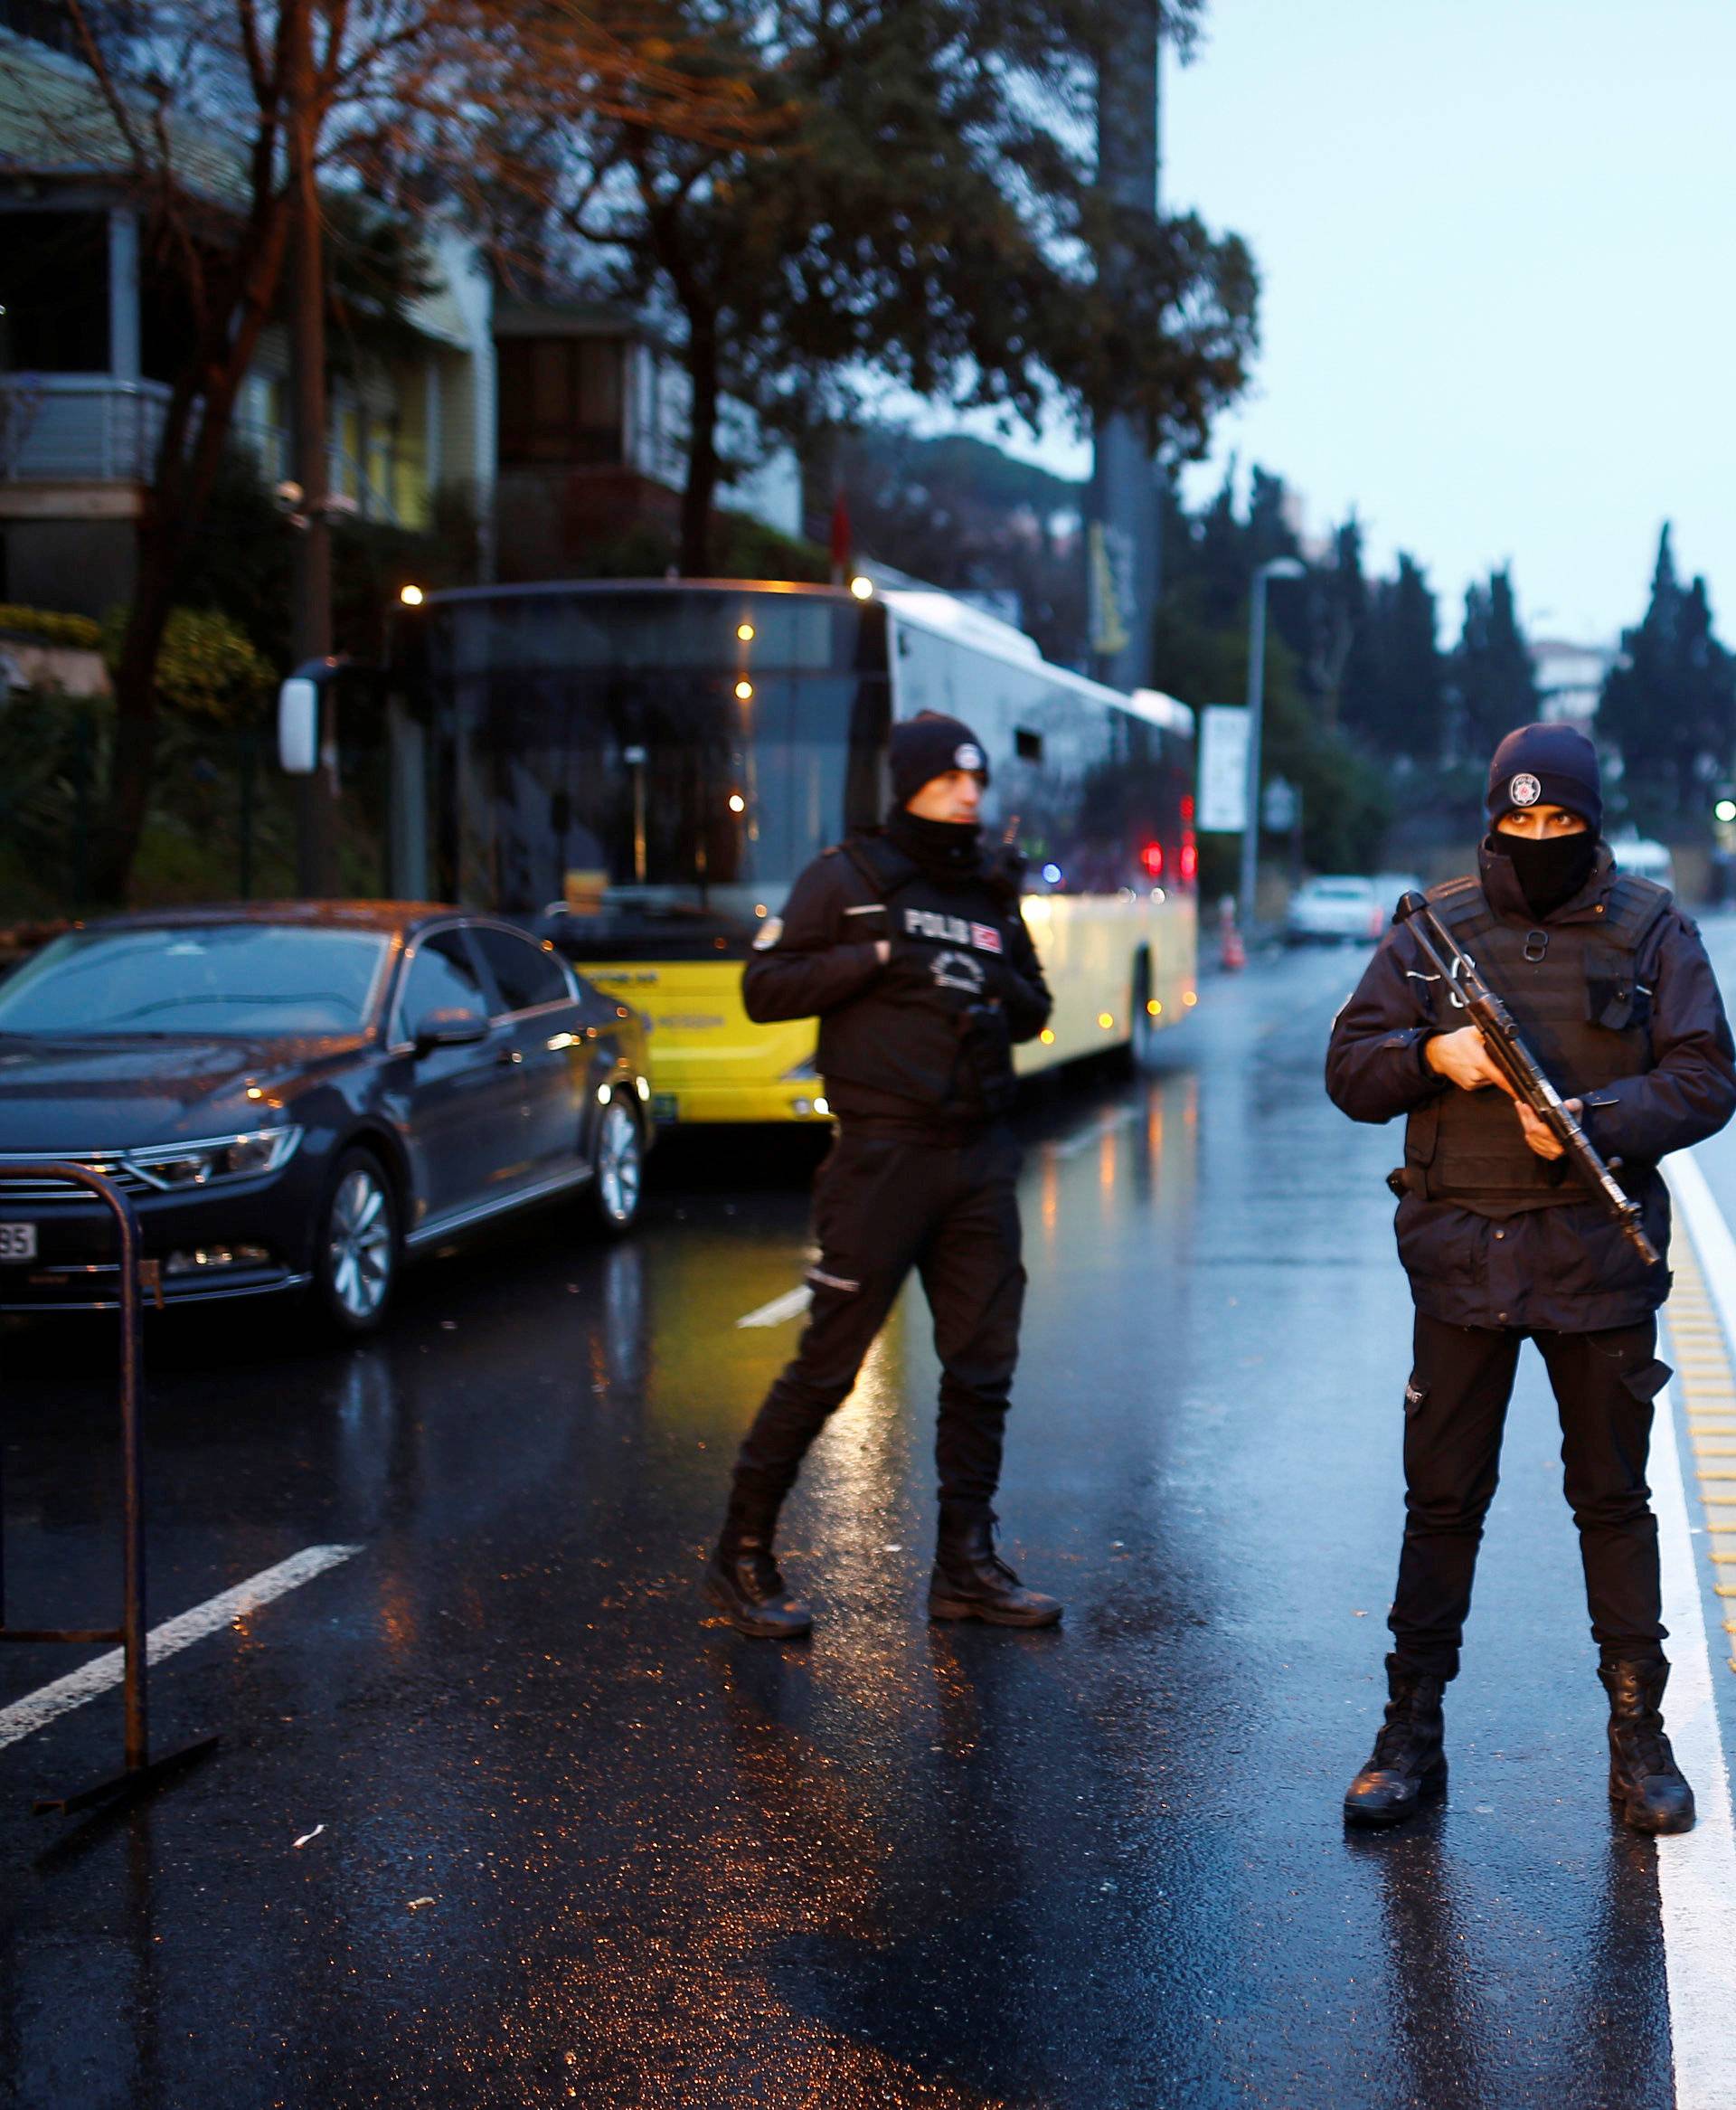 Police secure area near an Istanbul nightclub